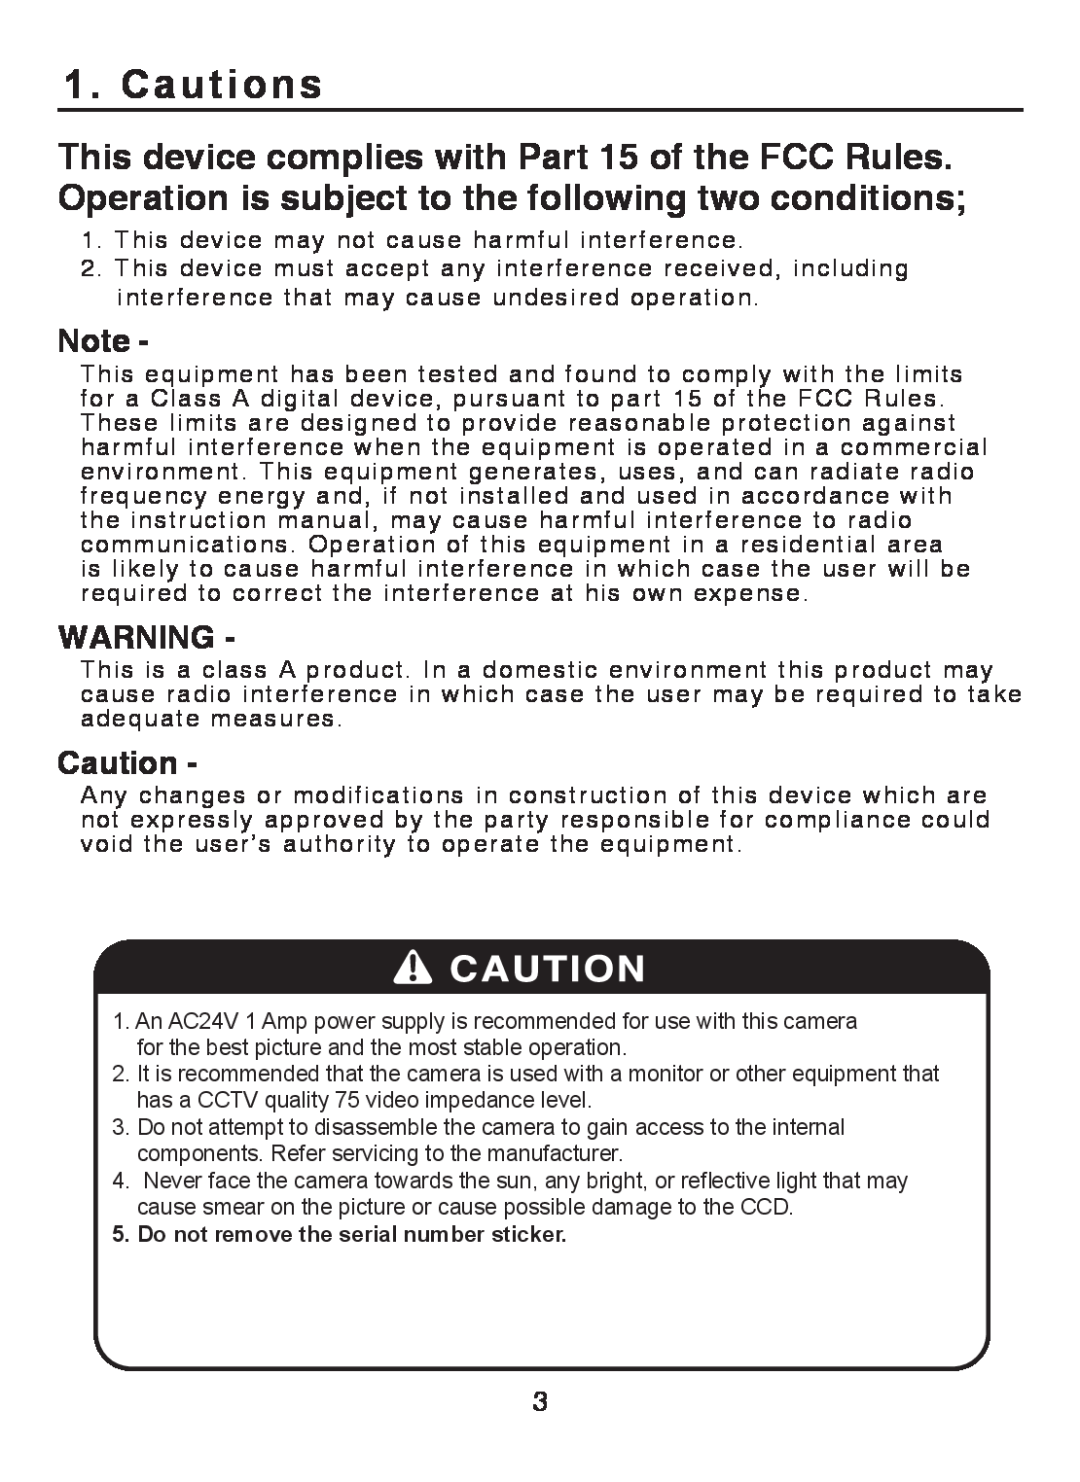 EverFocus EZ-PLATECAM2 operation manual Cautions 